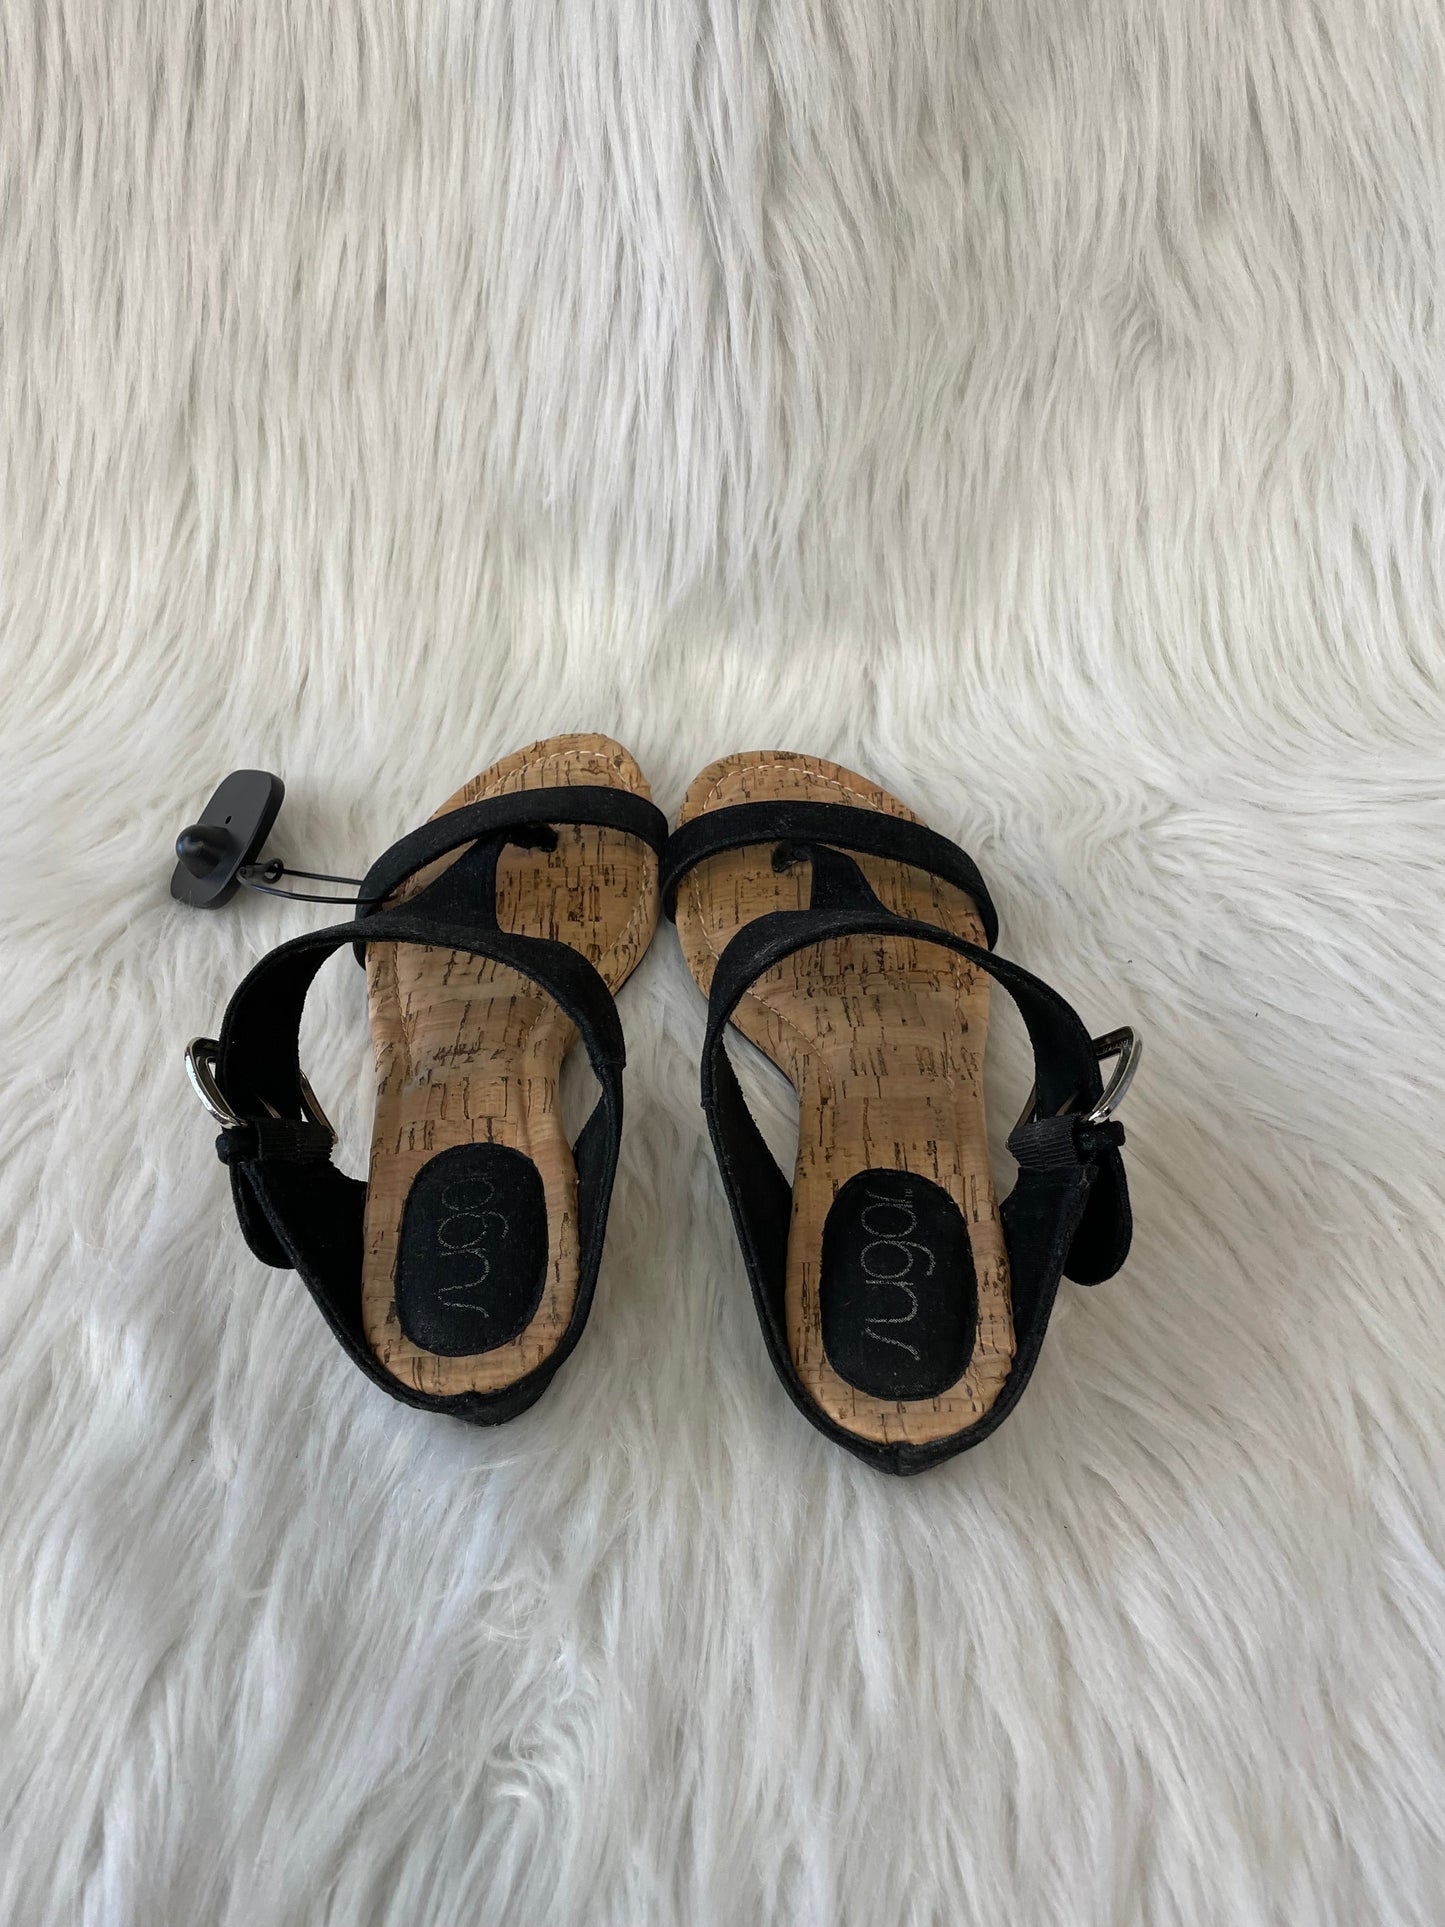 Black & Tan Sandals Heels Wedge Sugar, Size 6